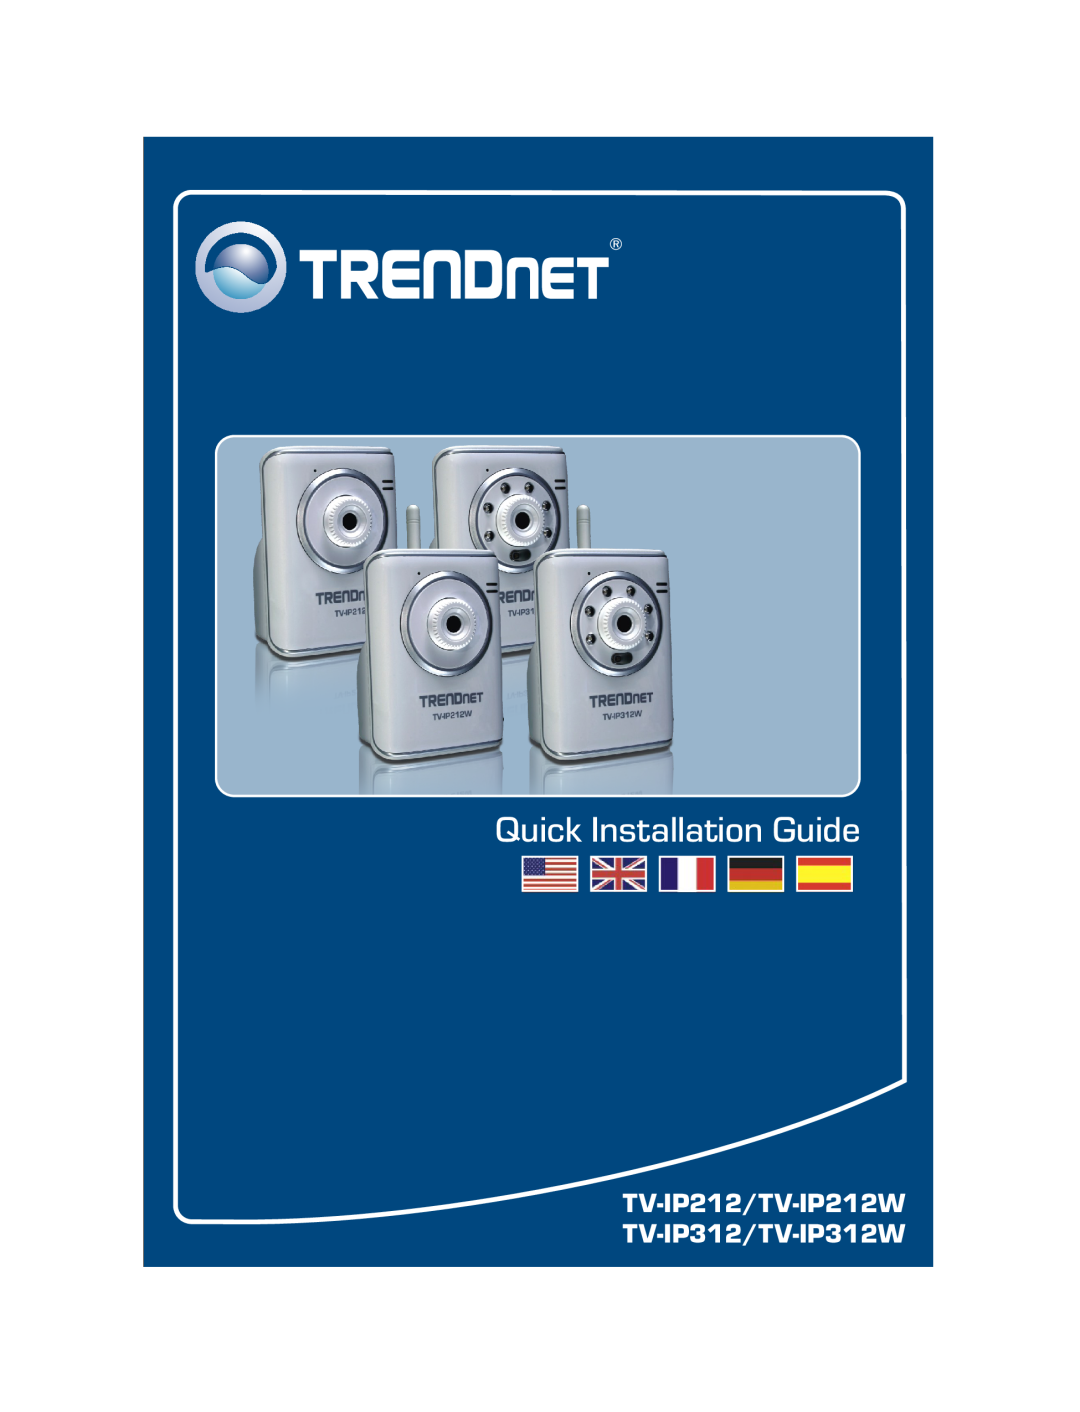 TRENDnet TPL-310AP, TRENDNET manual 1.01, Quick Installation Guide 